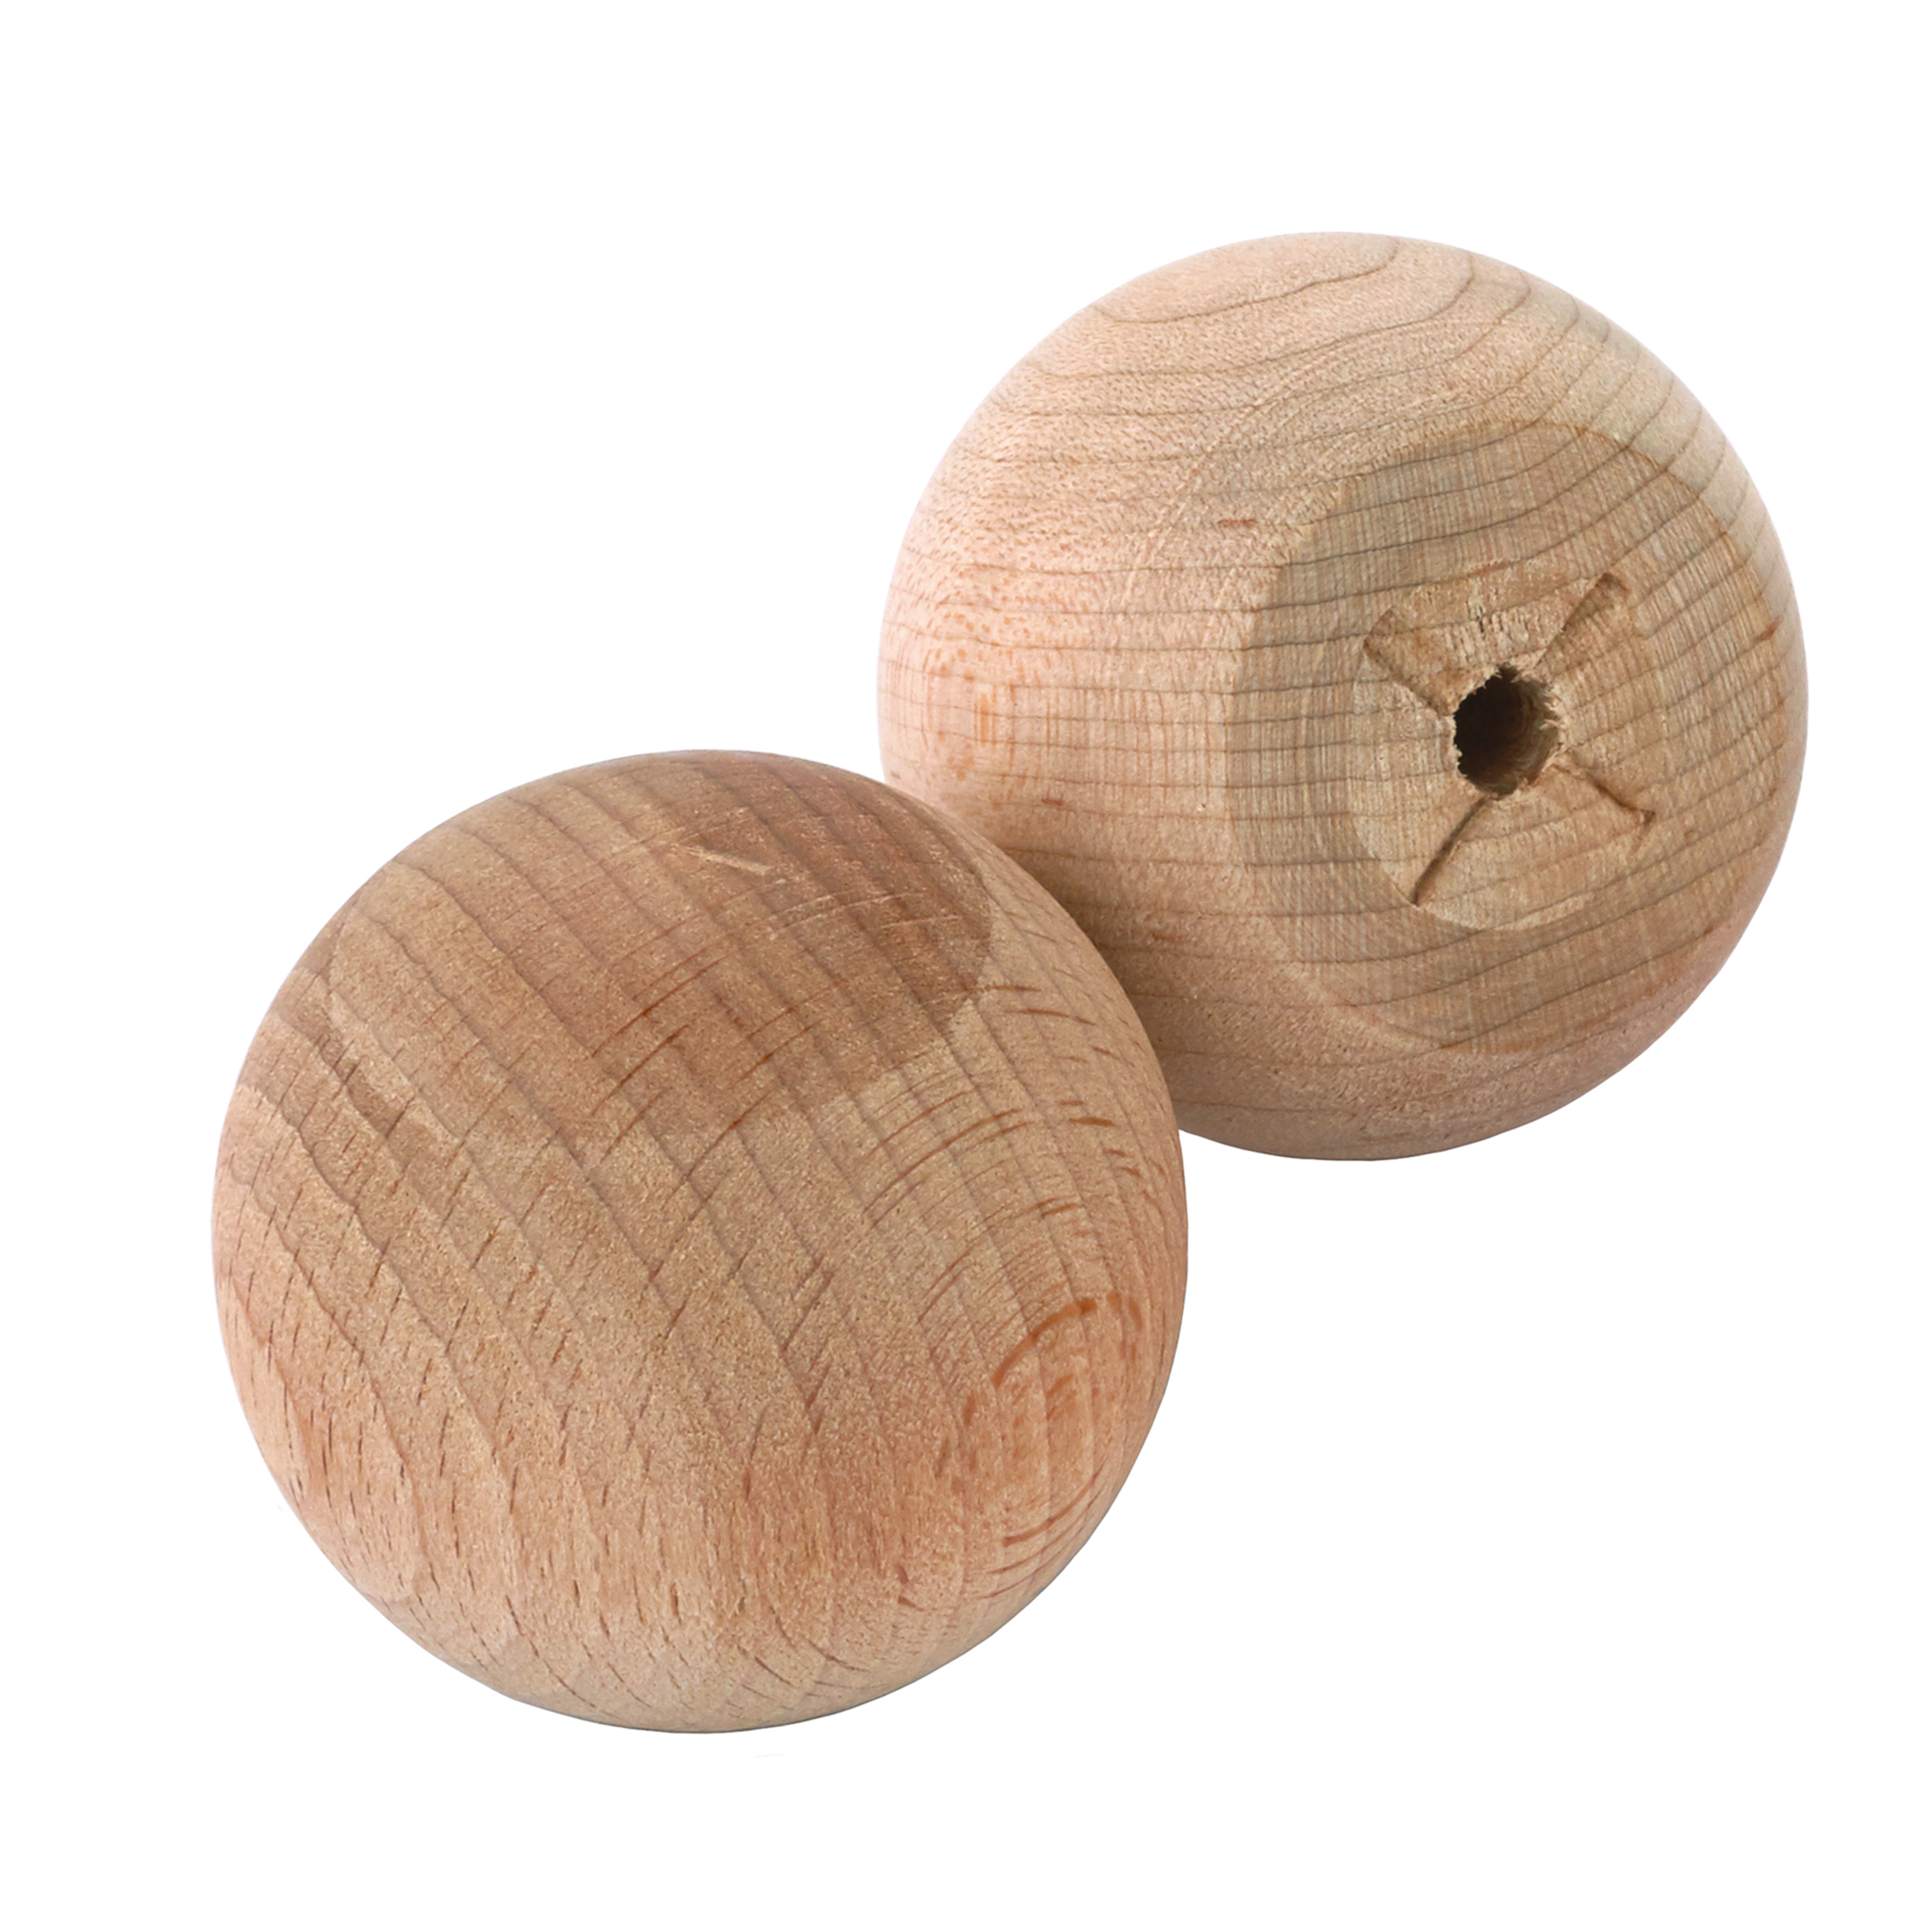 Hardwood Ball Knob, 1-1/2" Dia., Flat 1" W/screws 2-piece